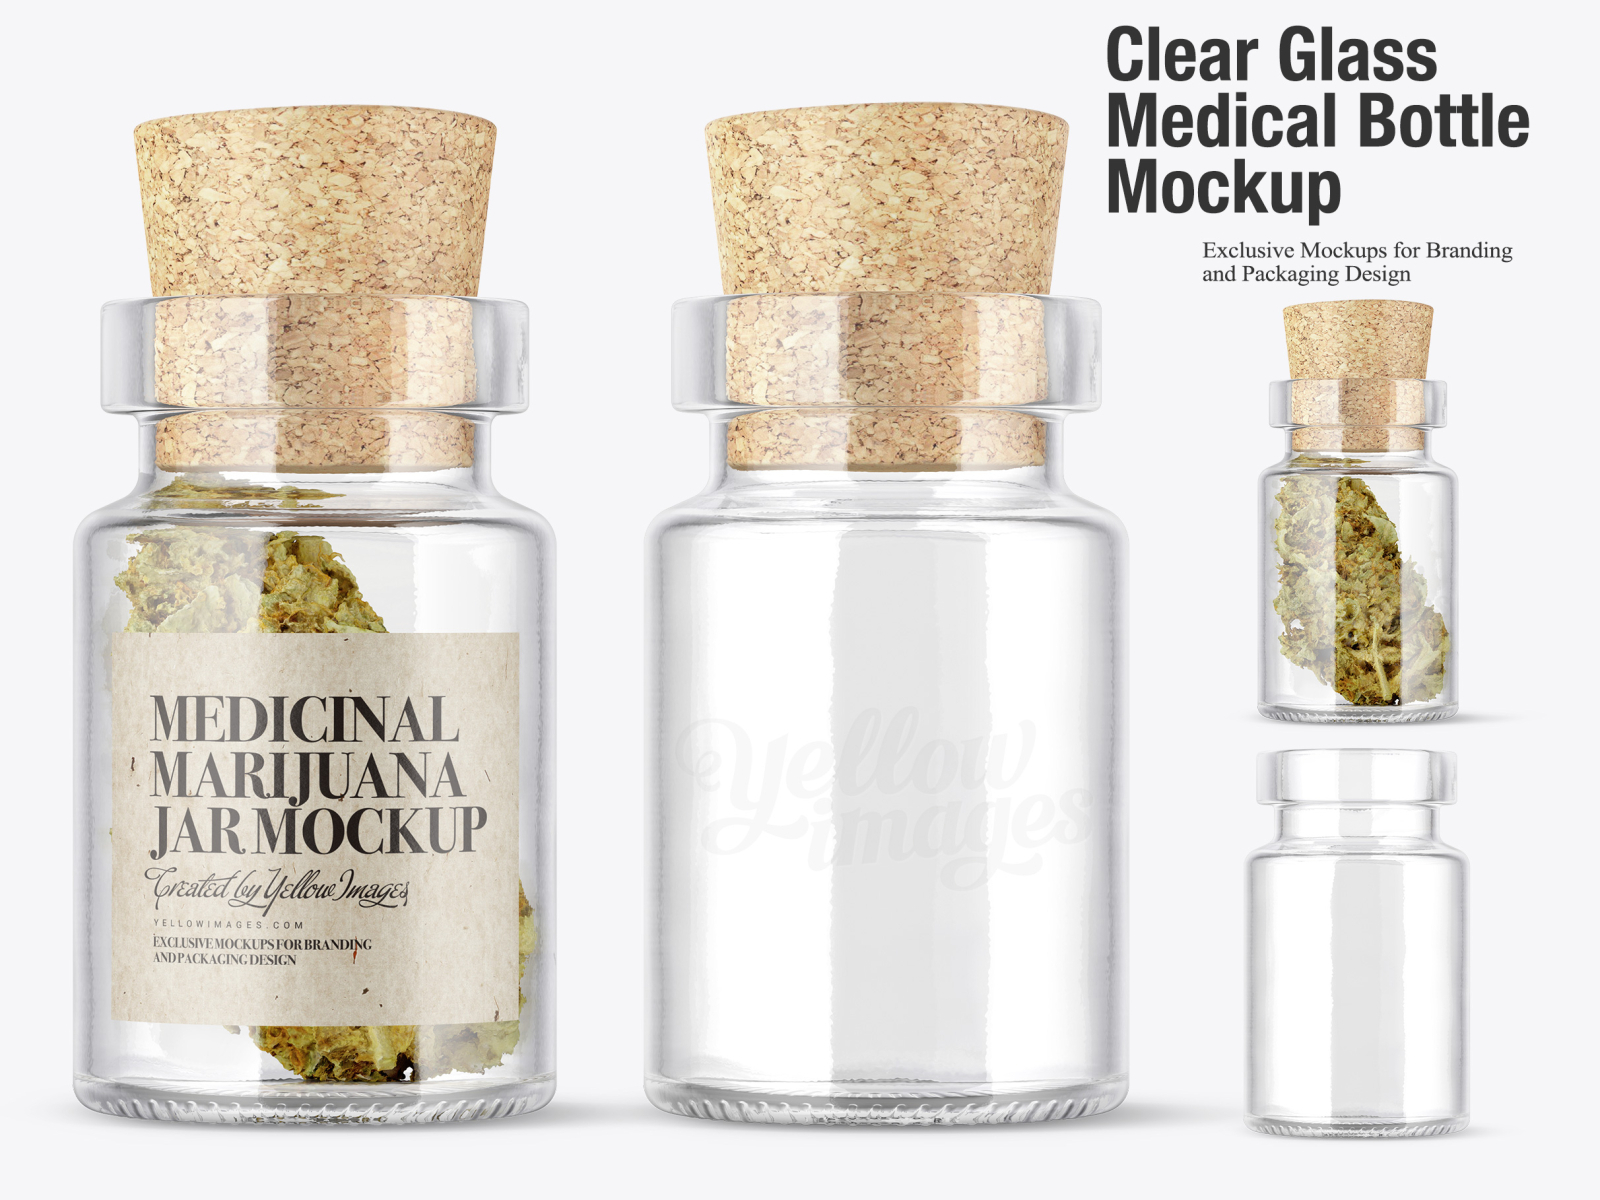 Clear Glass Medical Bottle Mockup By Oleksandr Hlubokyi On Dribbble